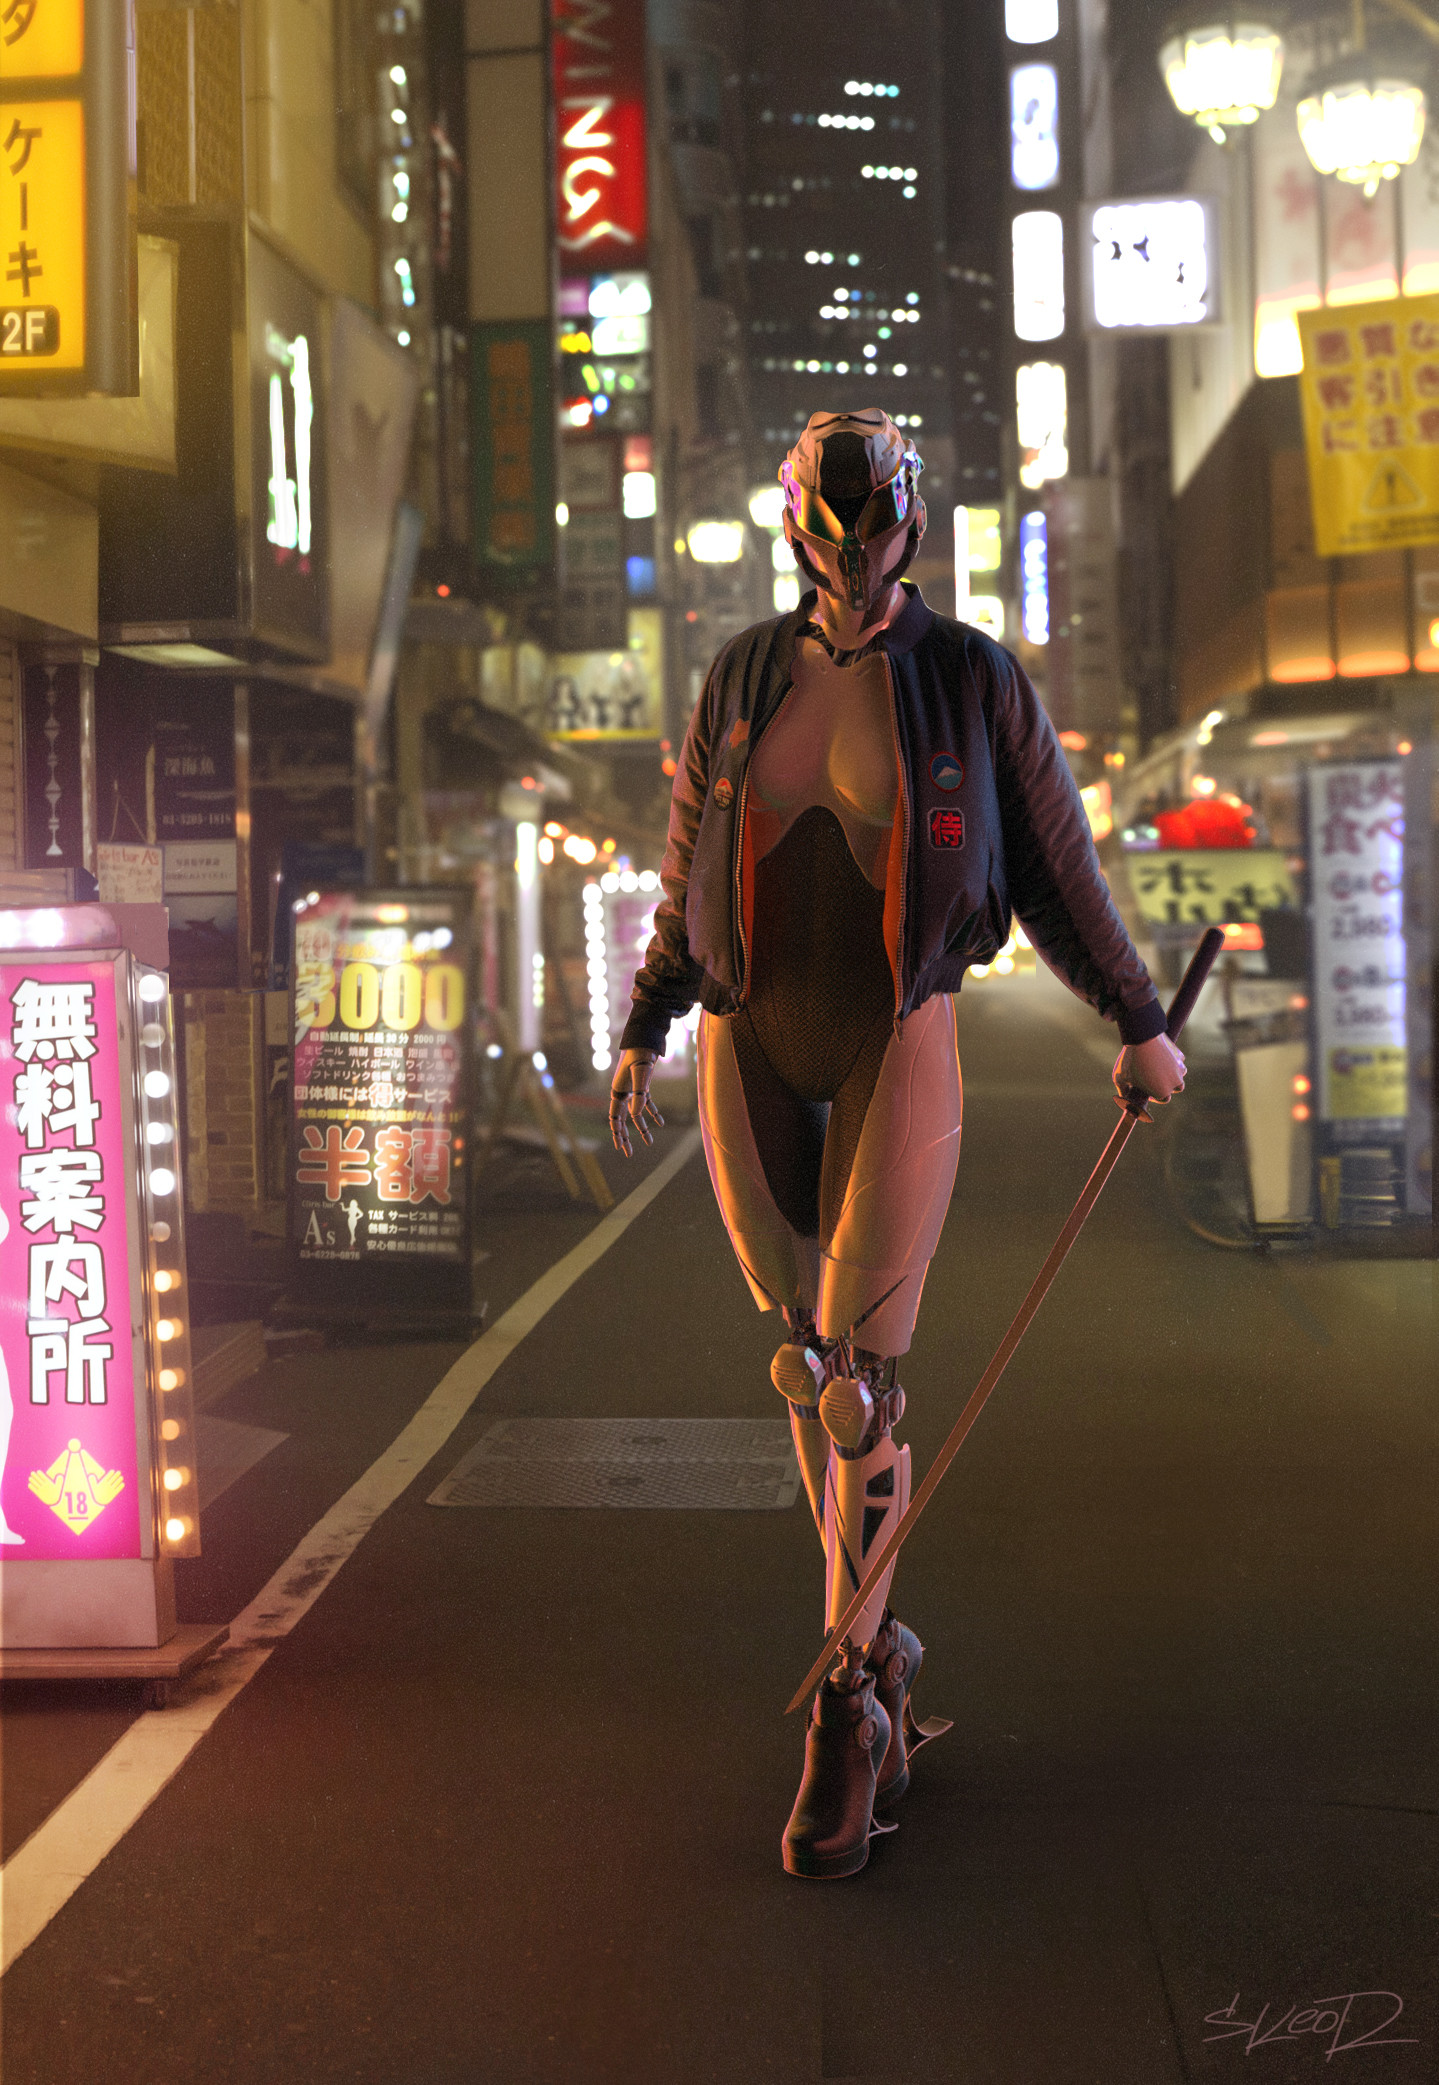 General 1439x2085 Tony Skeor women robot sword artwork neon digital art cyberpunk retrowave retro style Japan street cityscape